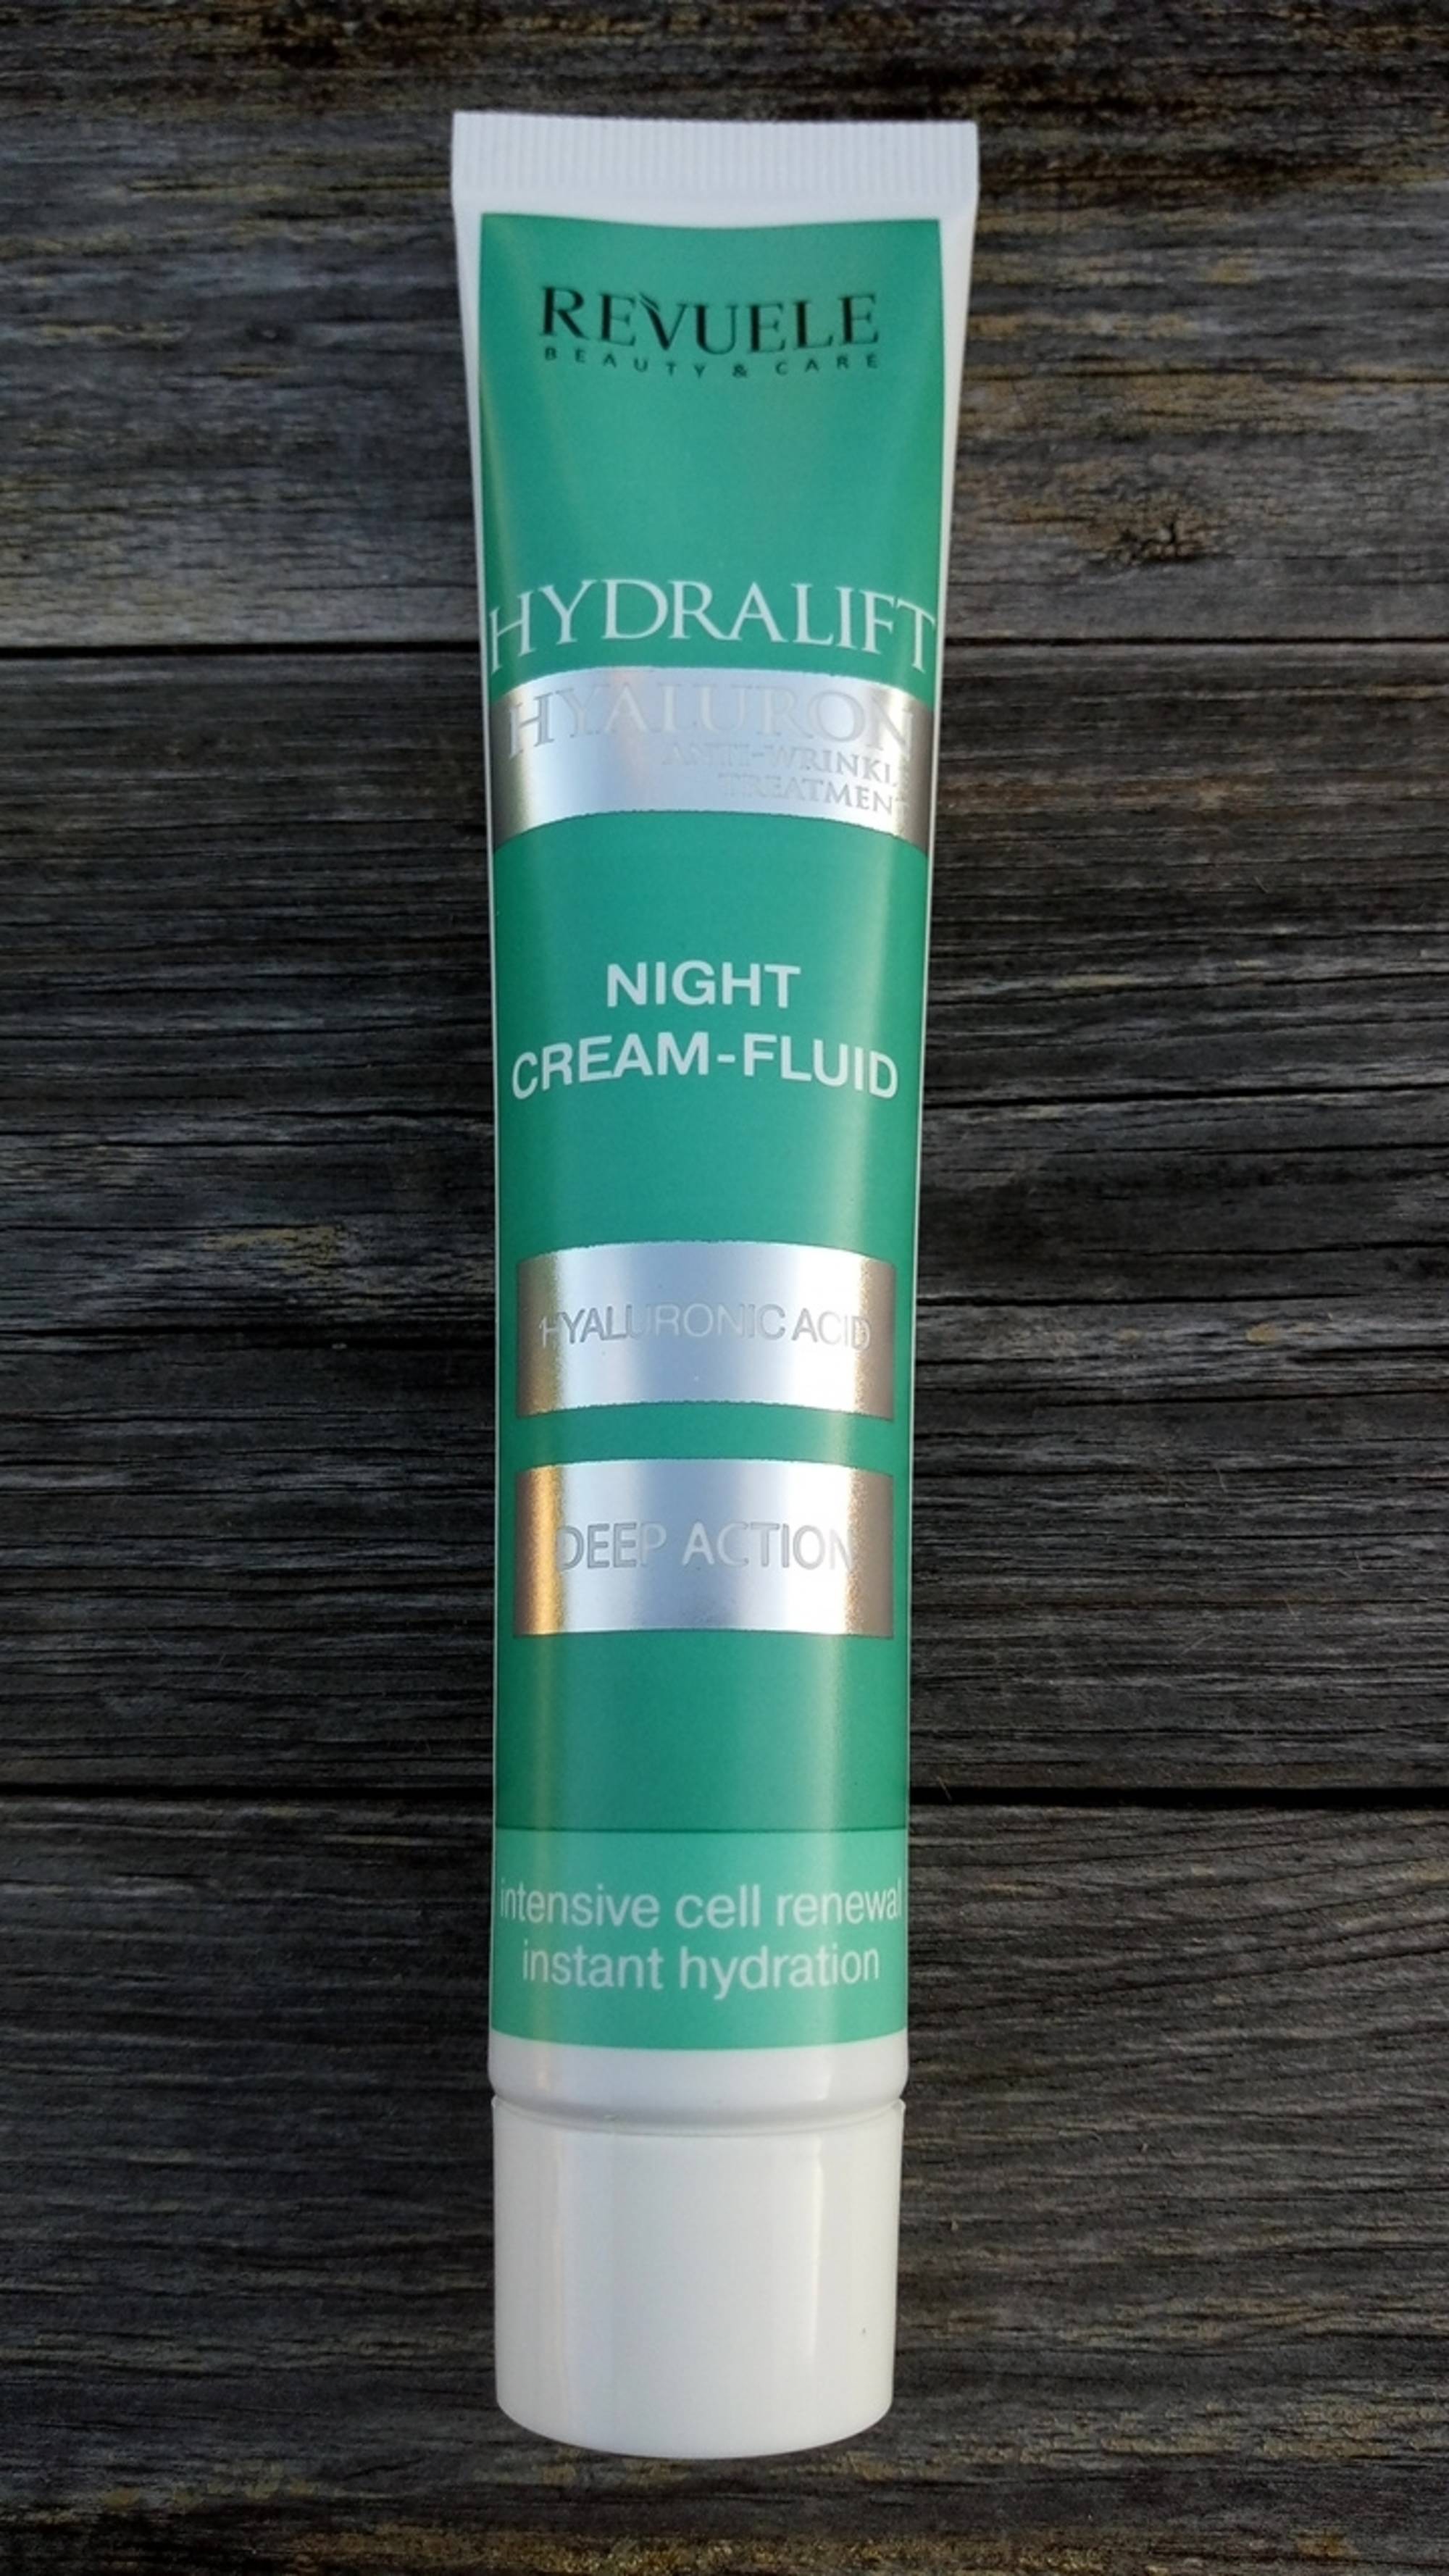 REVUELE - Hydralift - Night cream-fluid